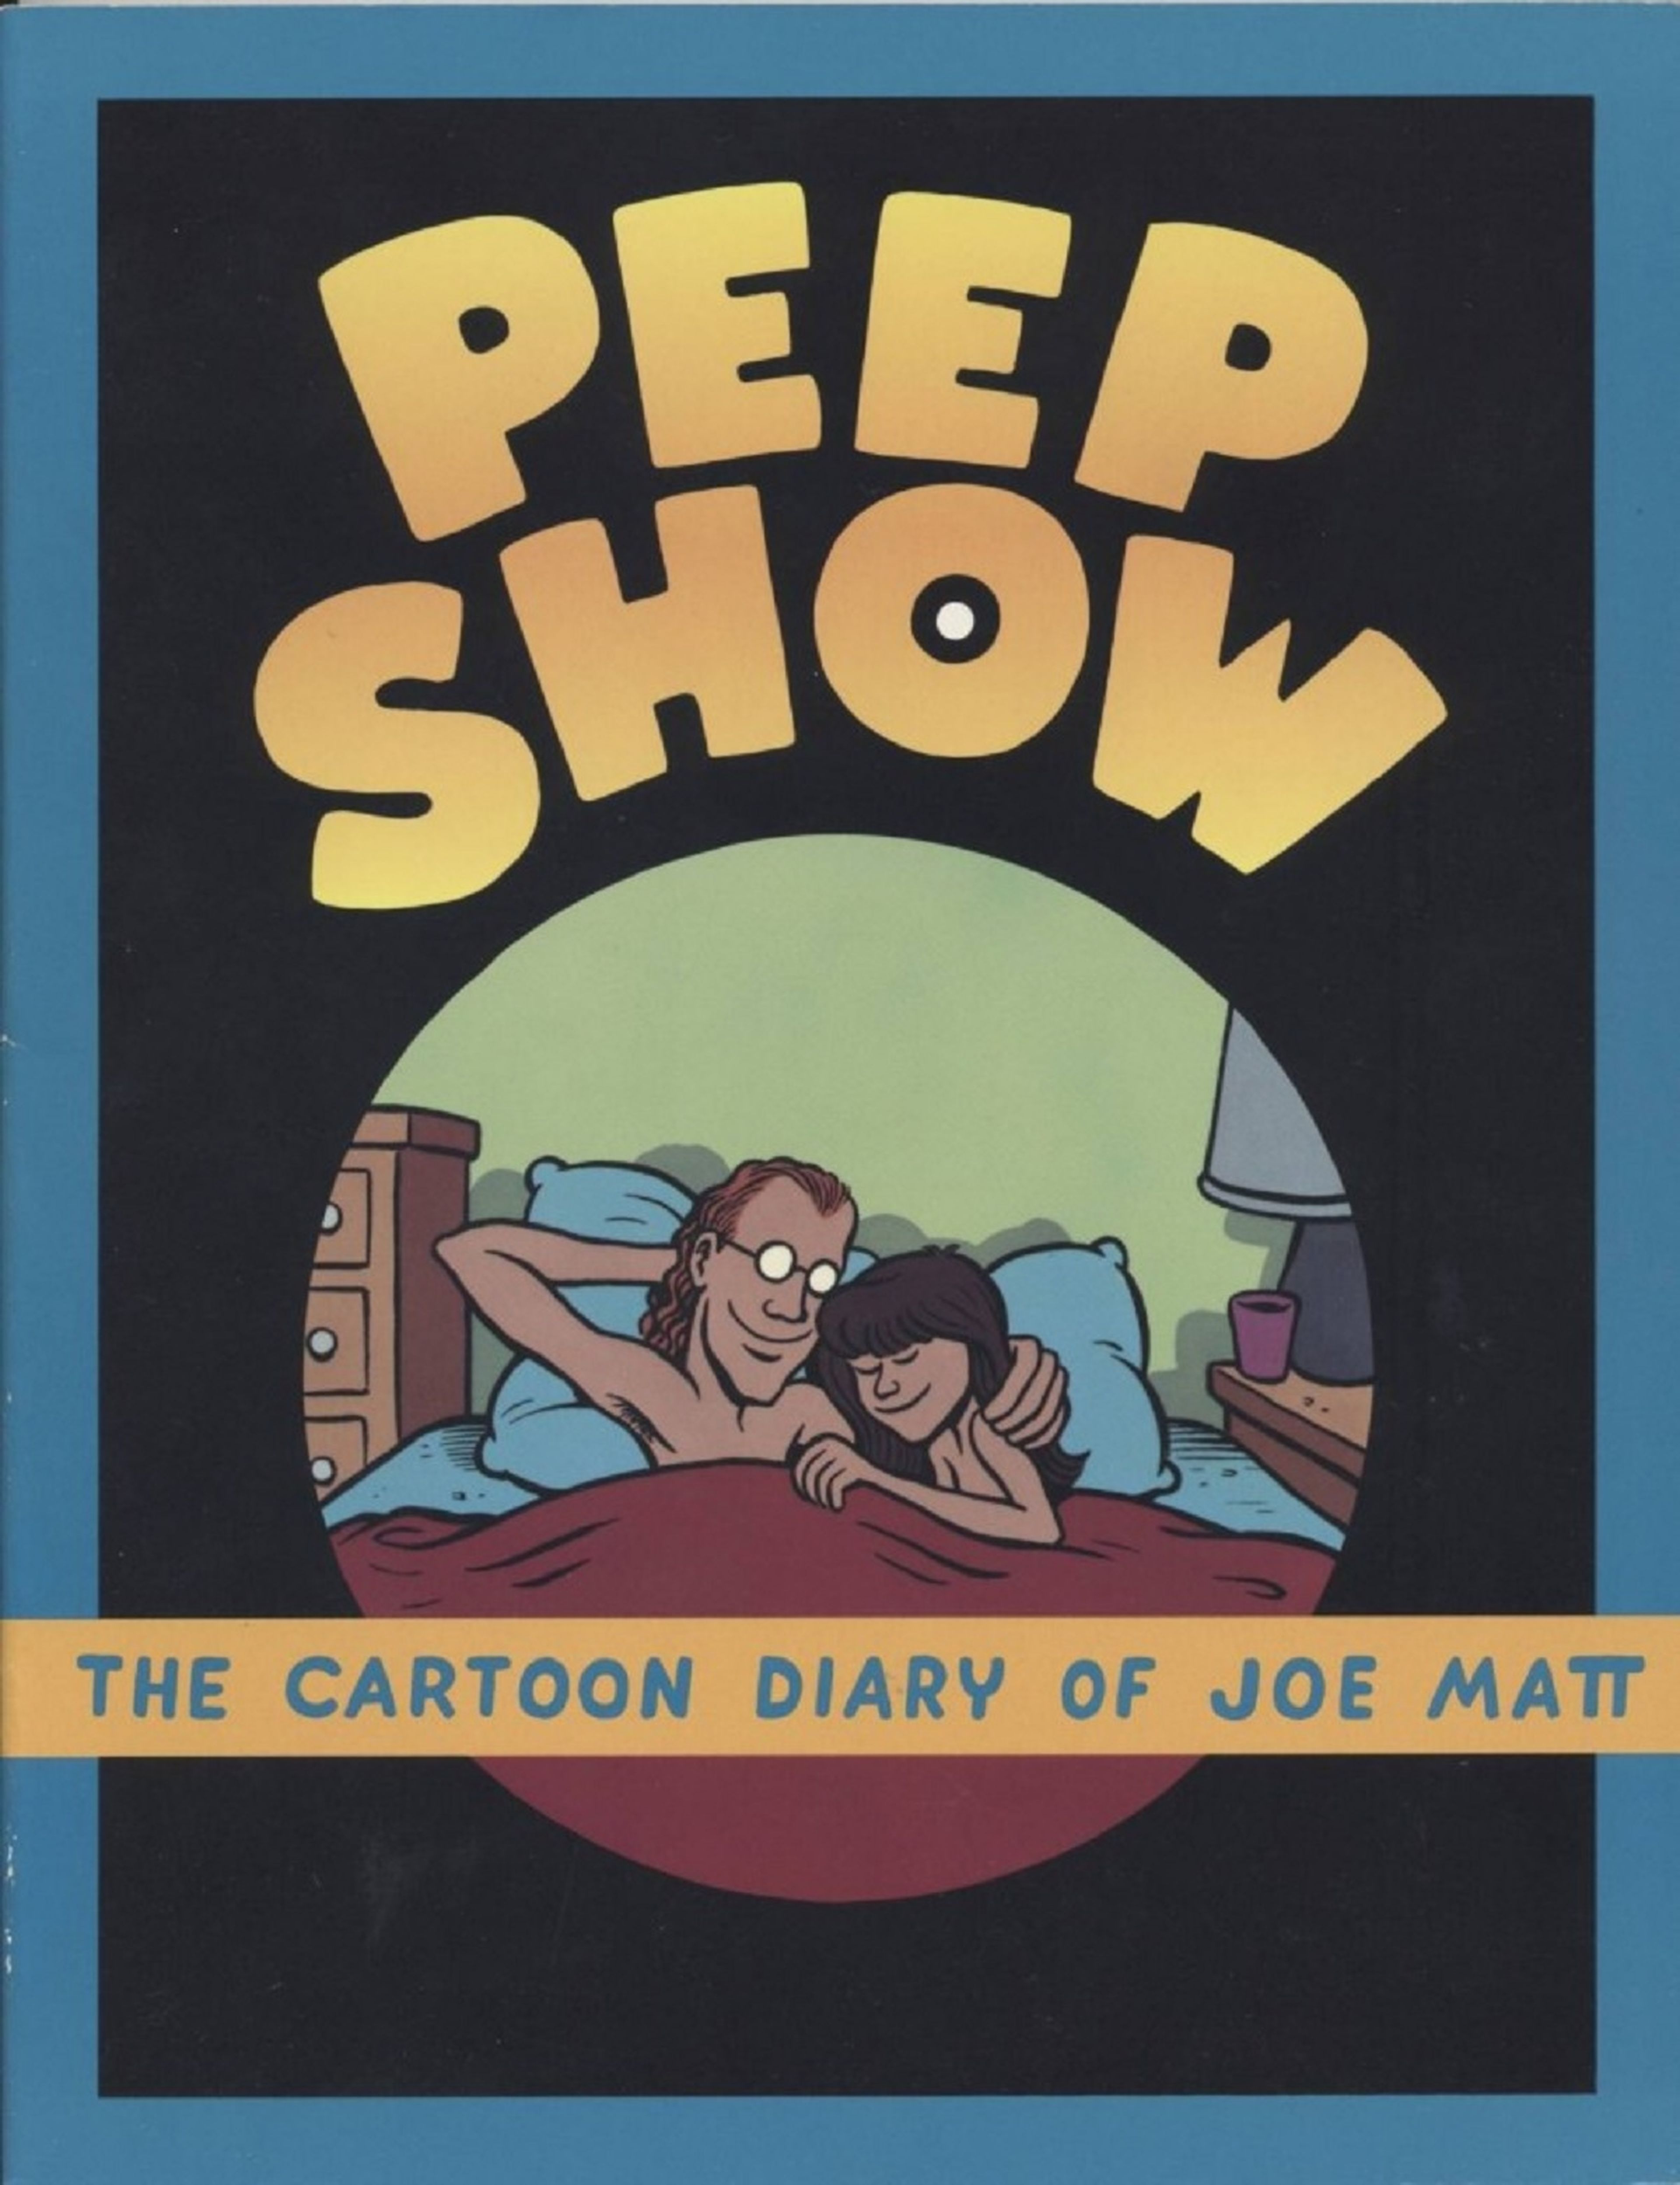 Peepshow (Joe Matt)